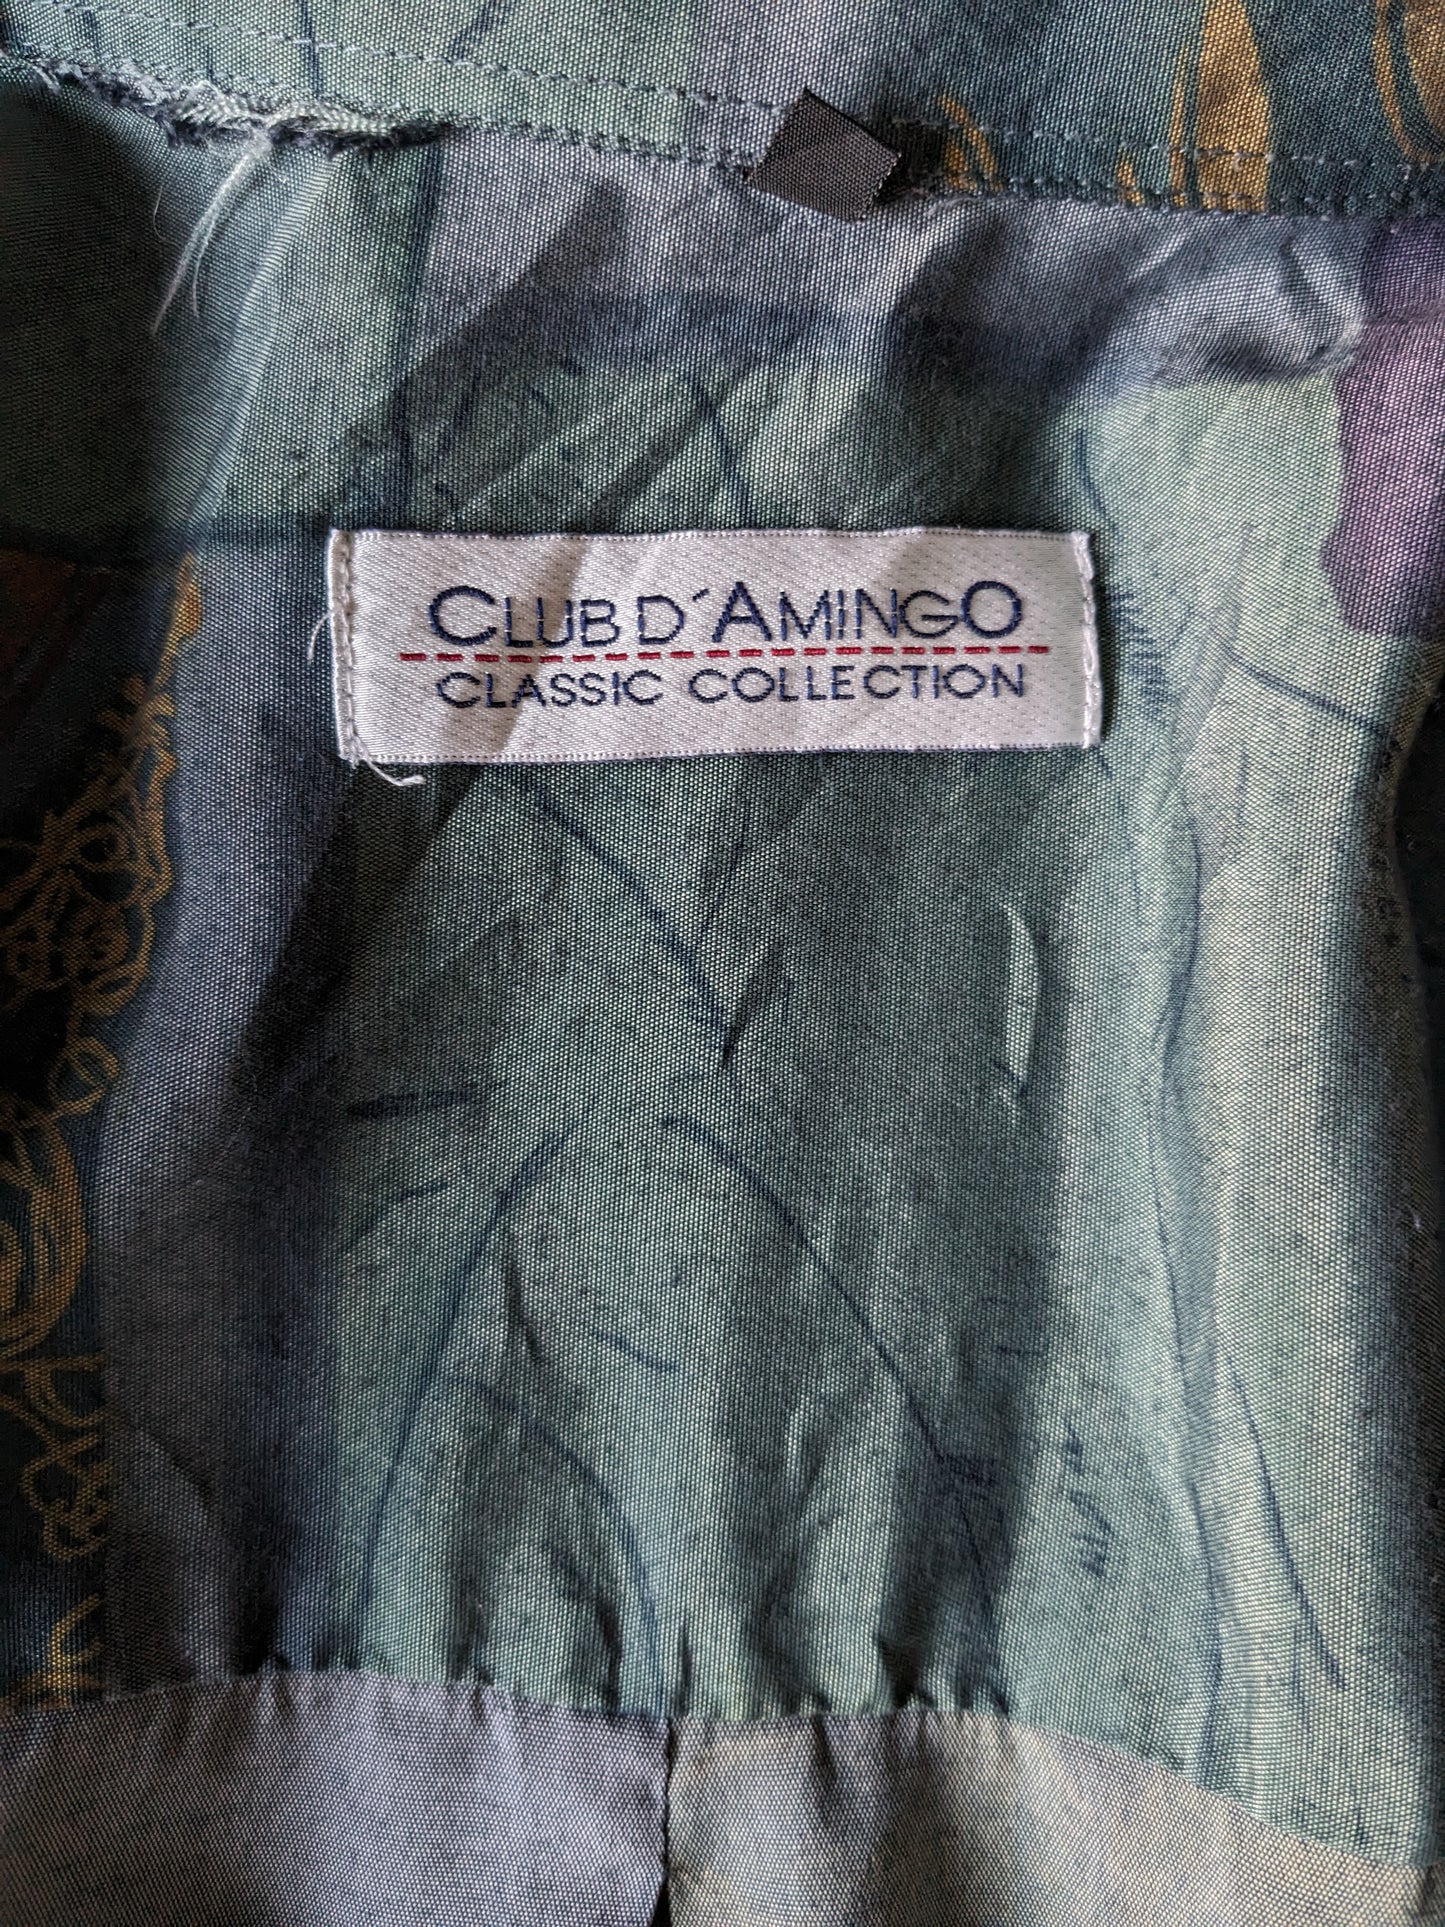 Vintage Club D'Amingo 90's overhemd. Grijs geel paars groene print. Maat XL.